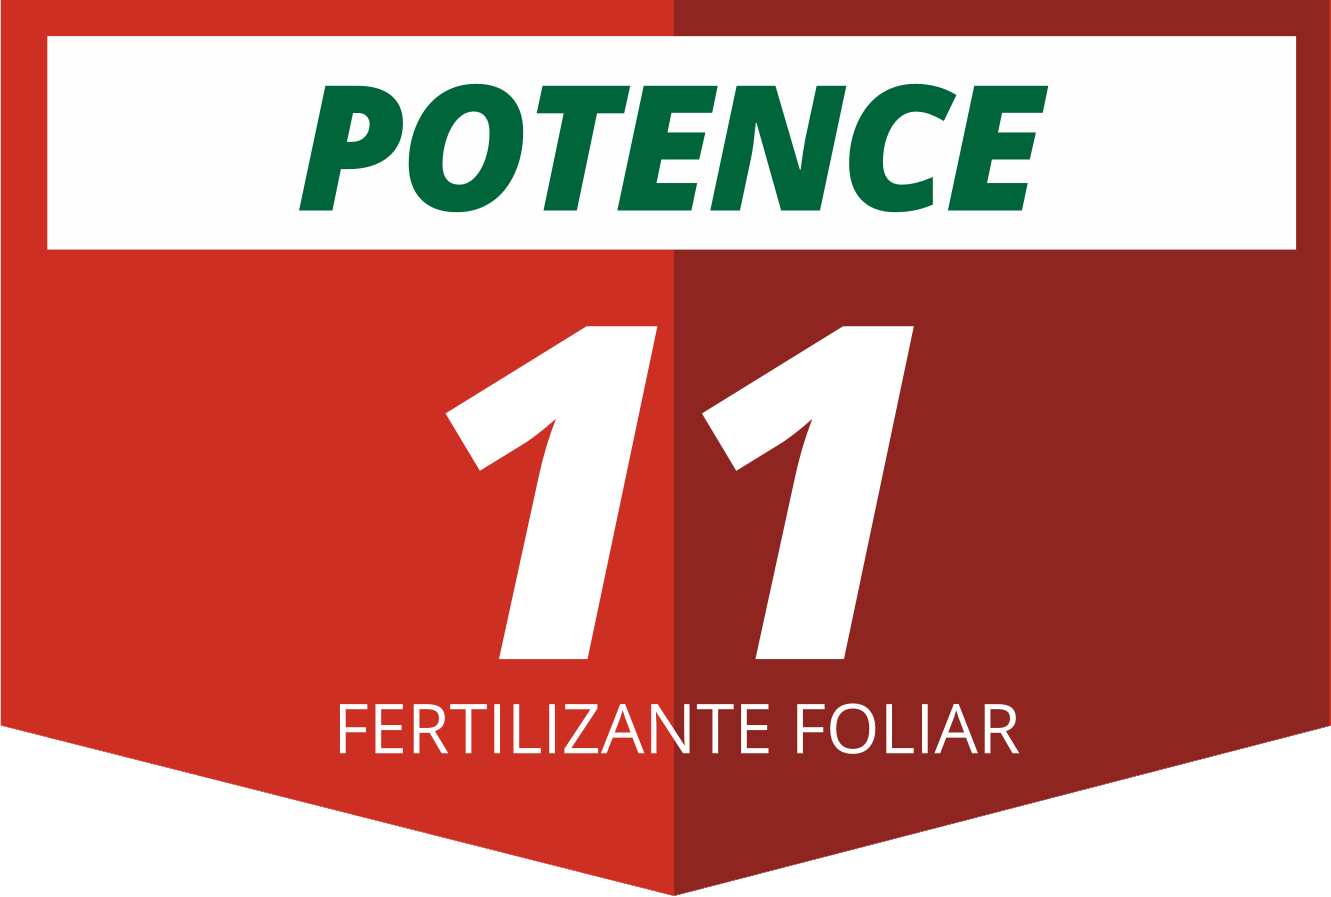 Potence 11